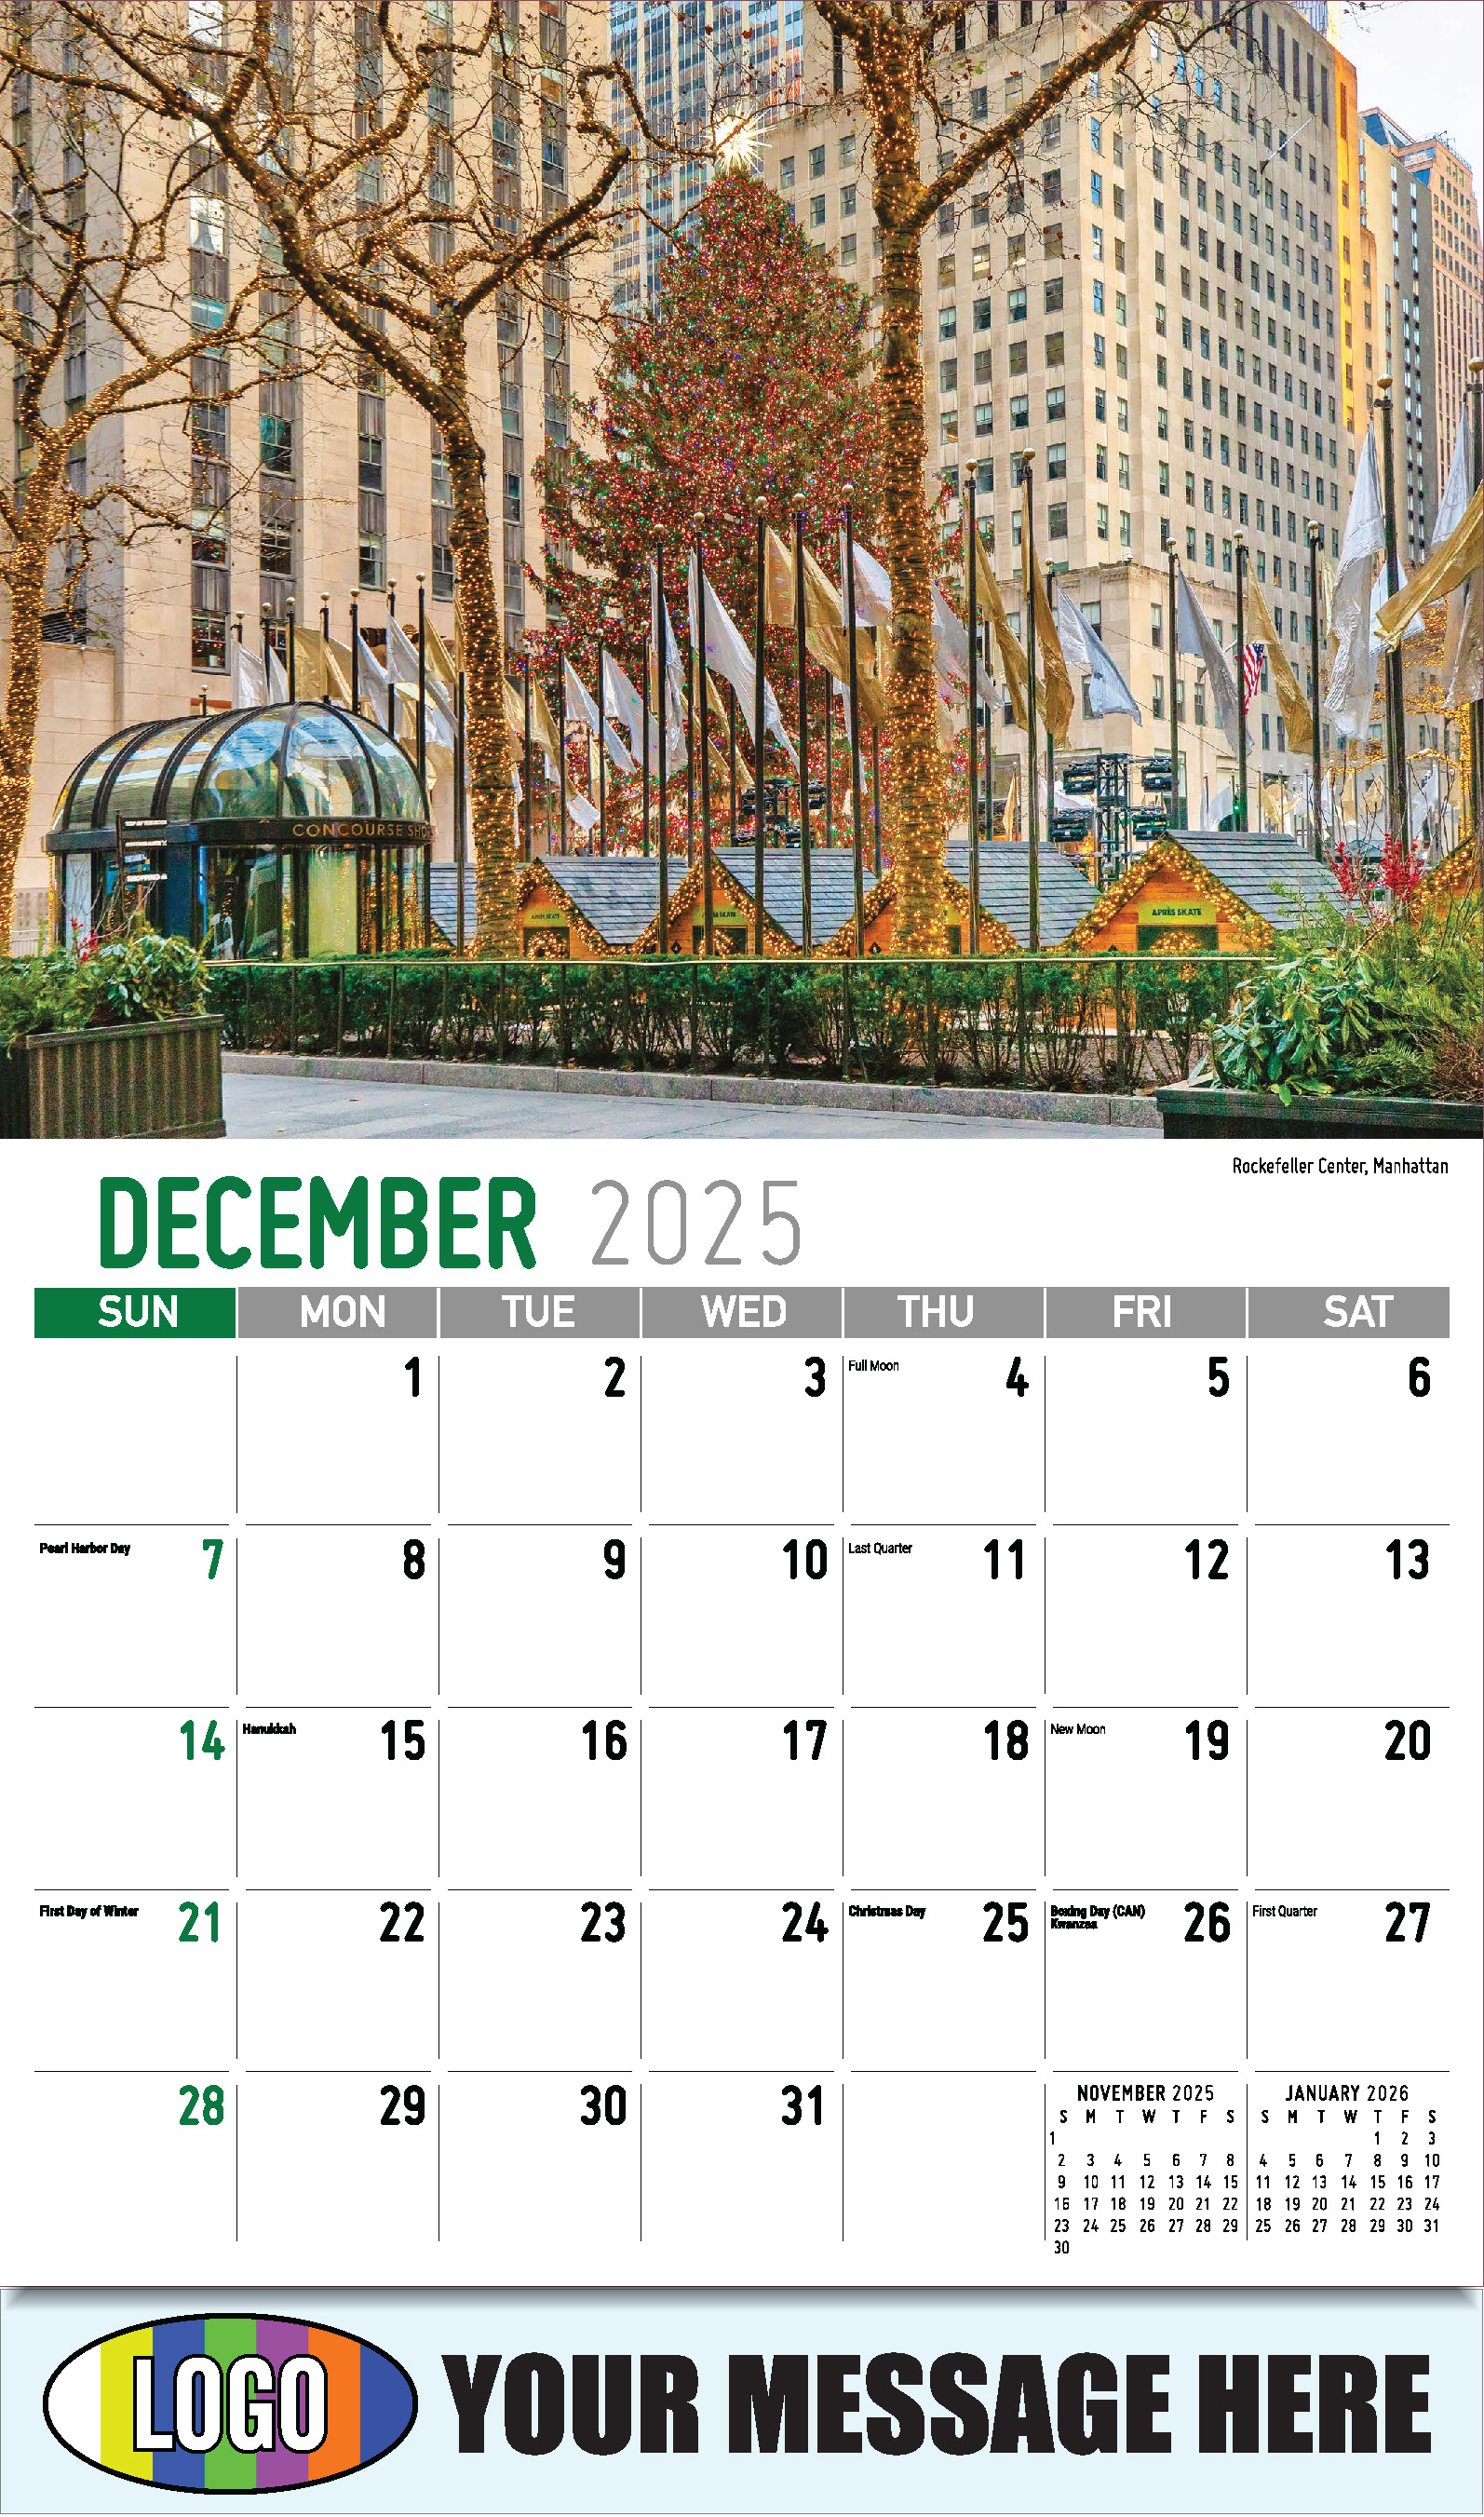 Scenes of New York 2025 Business Promotional Wall Calendar - December